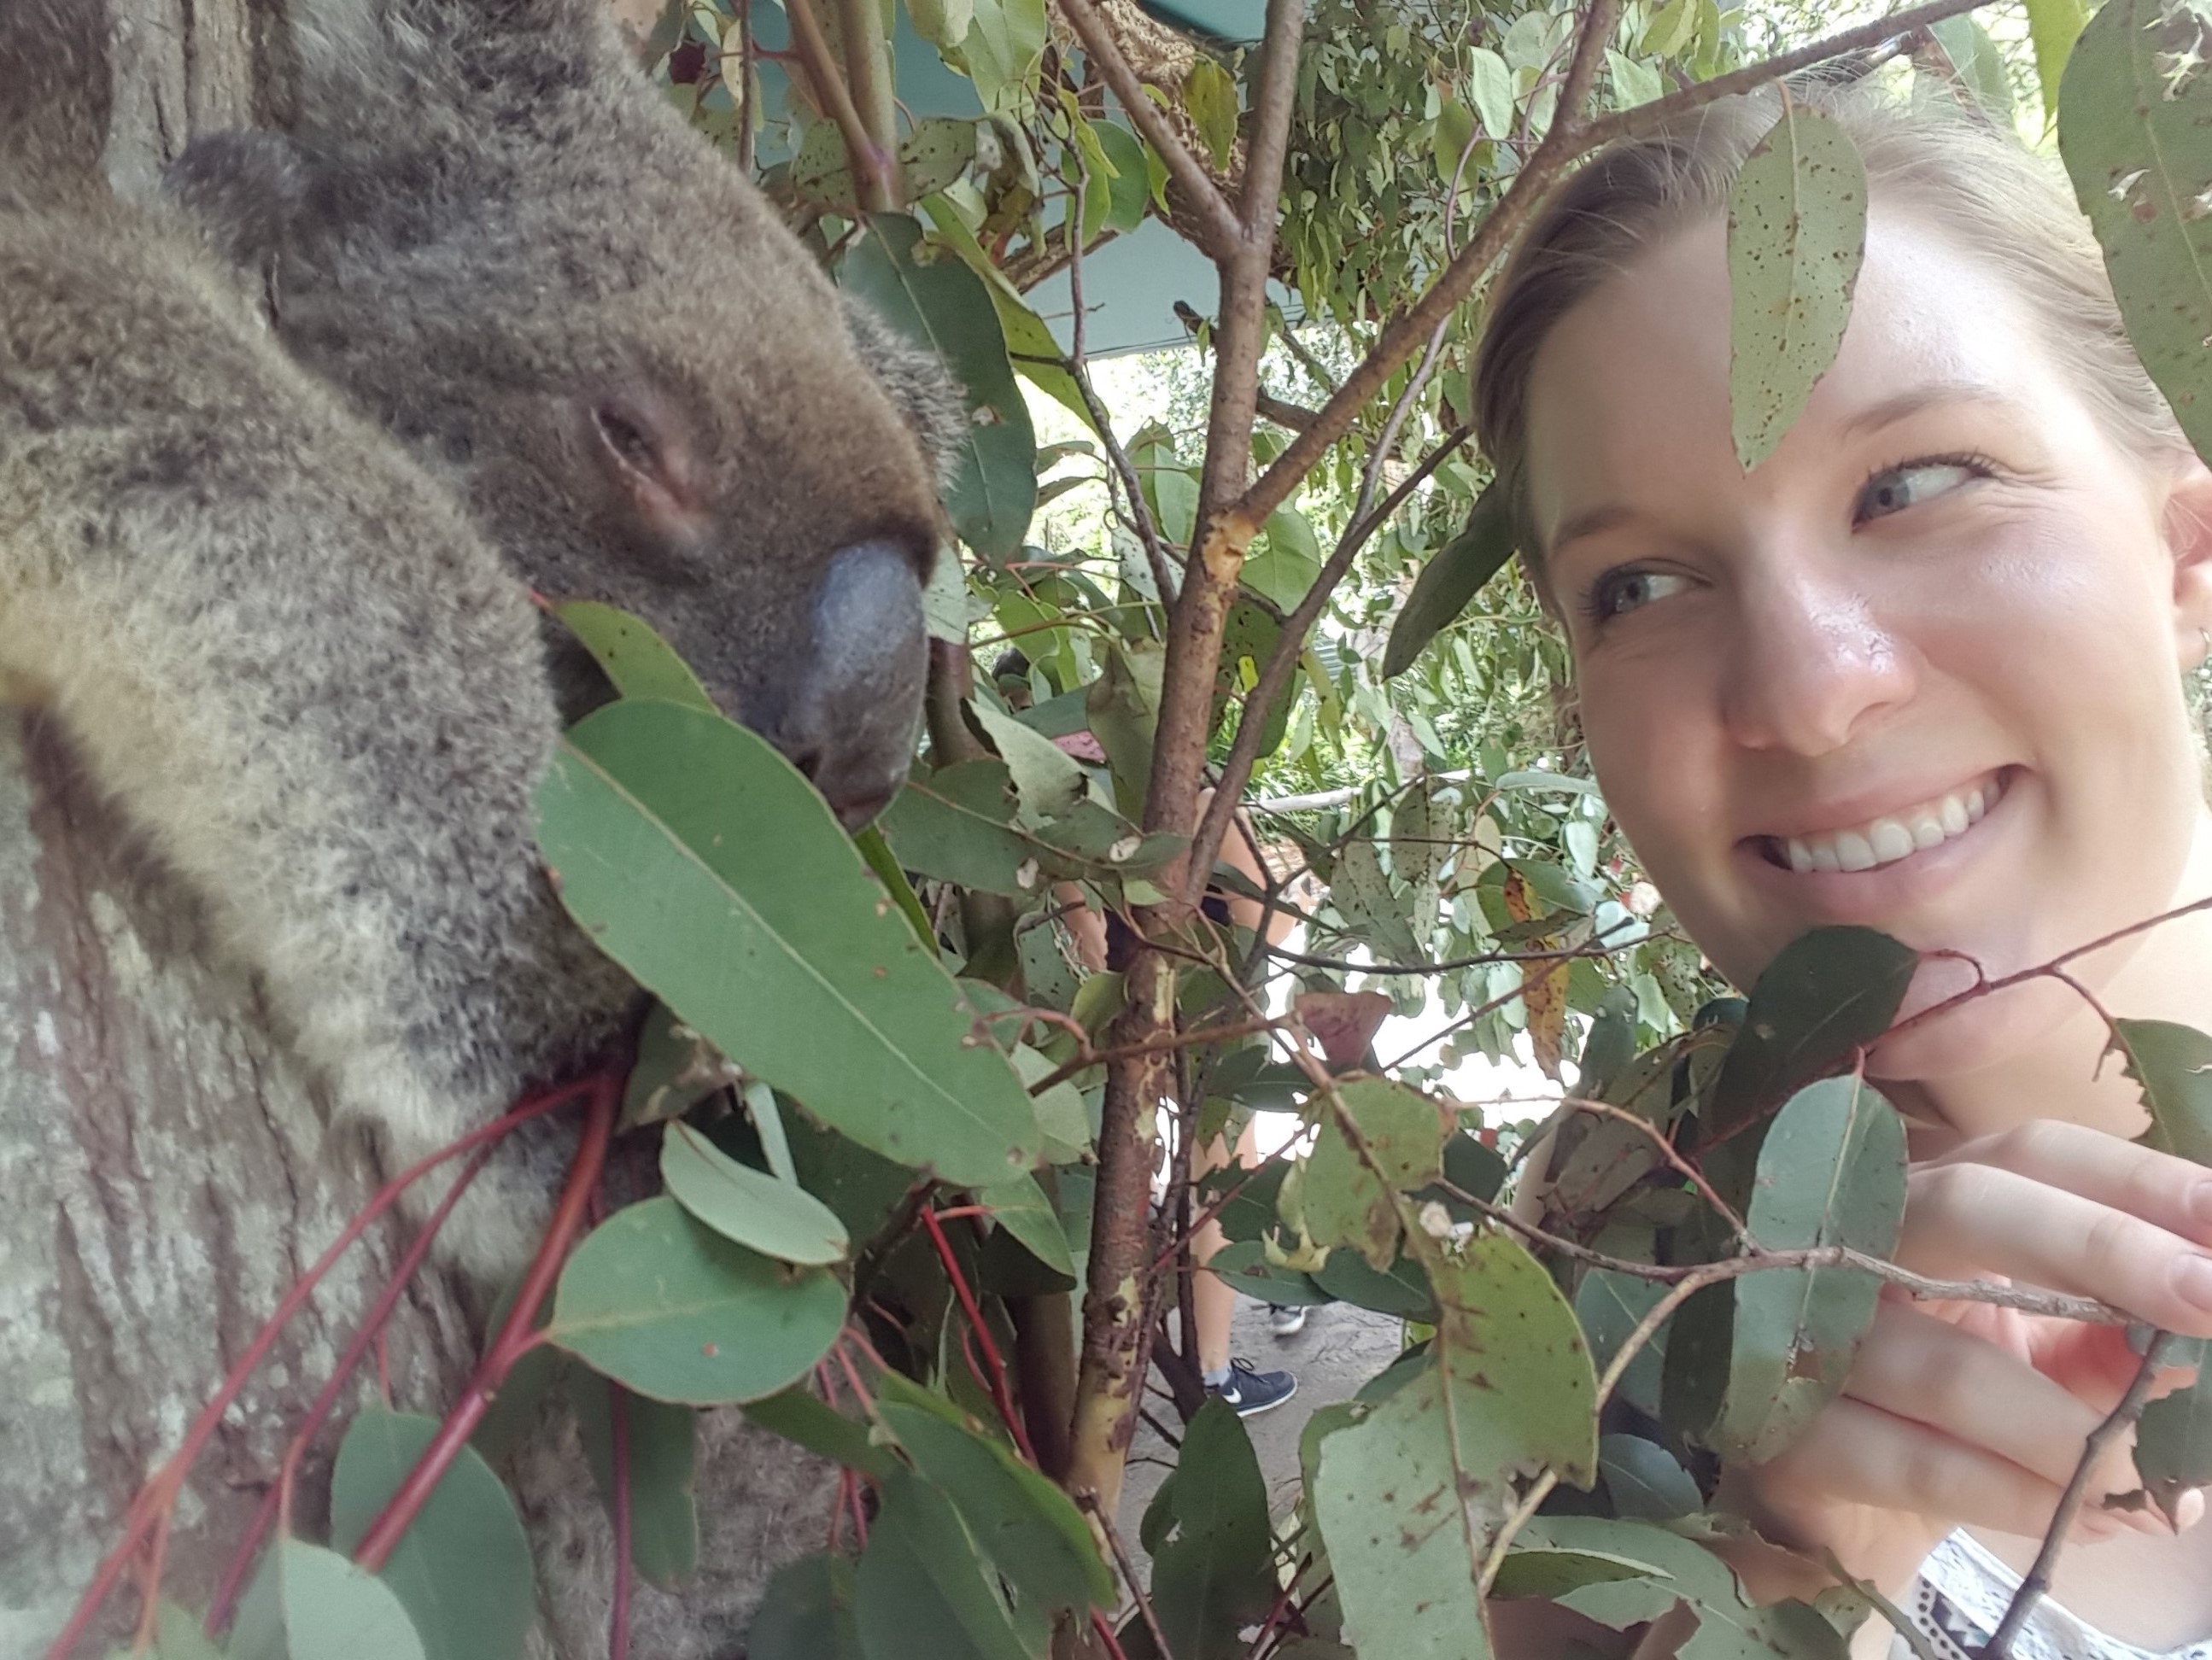 Dahlhausen and a koala